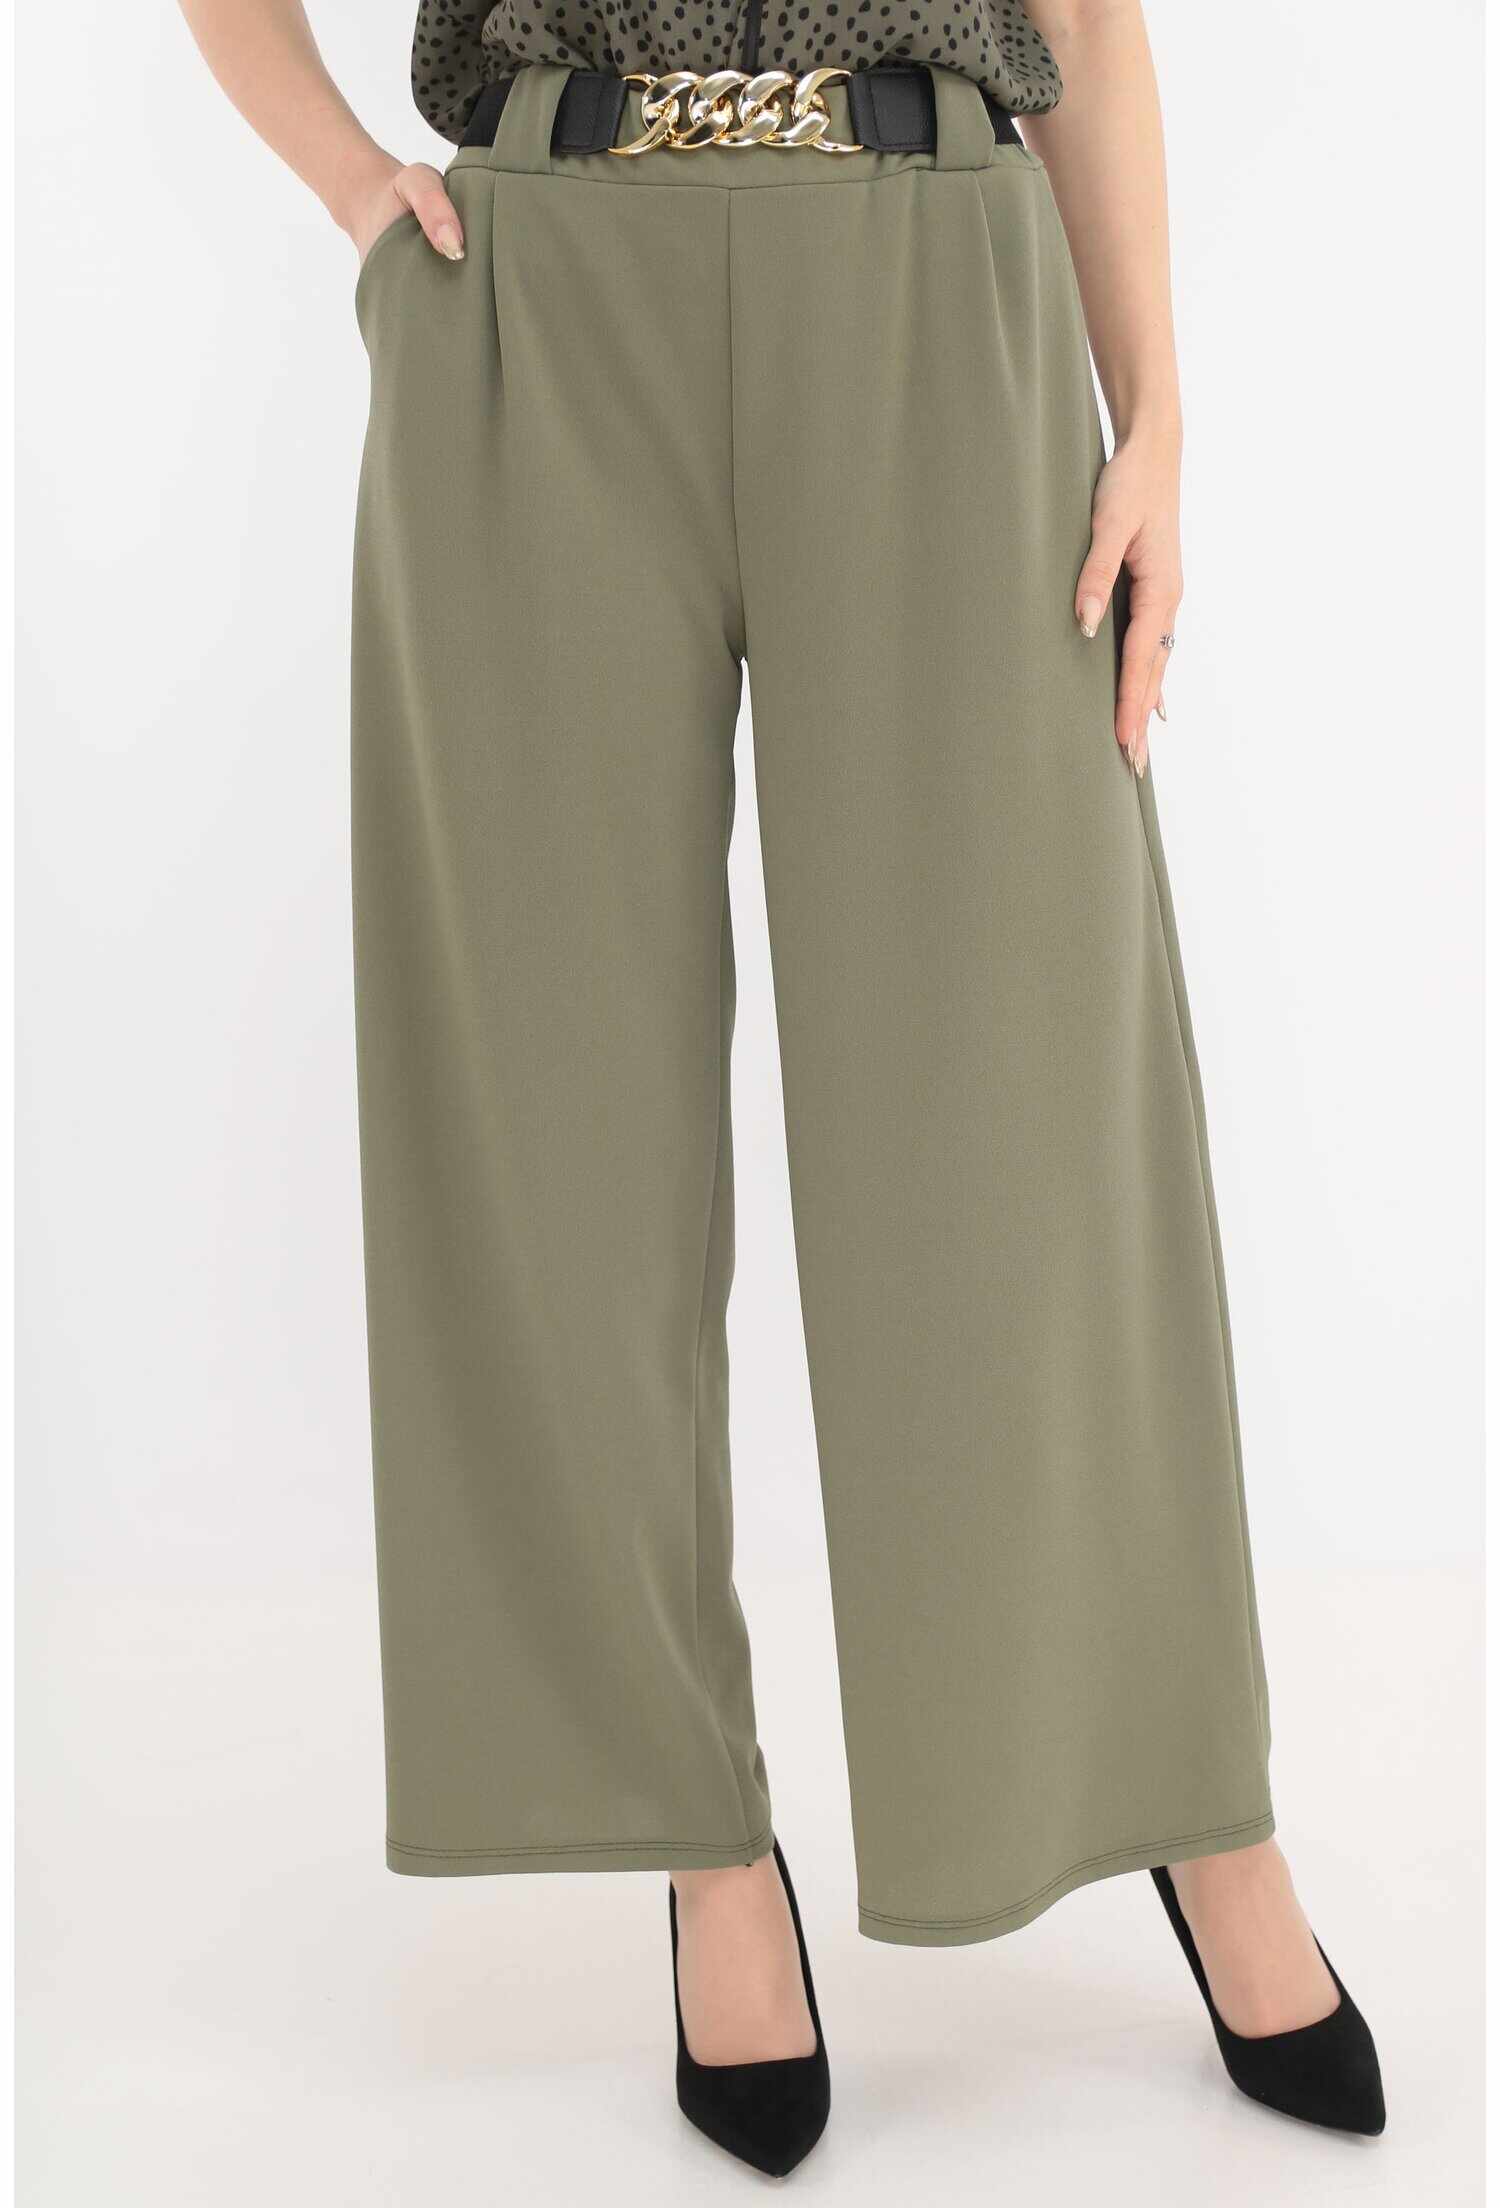 Pantaloni lejeri olive cu o curea elastica in talie